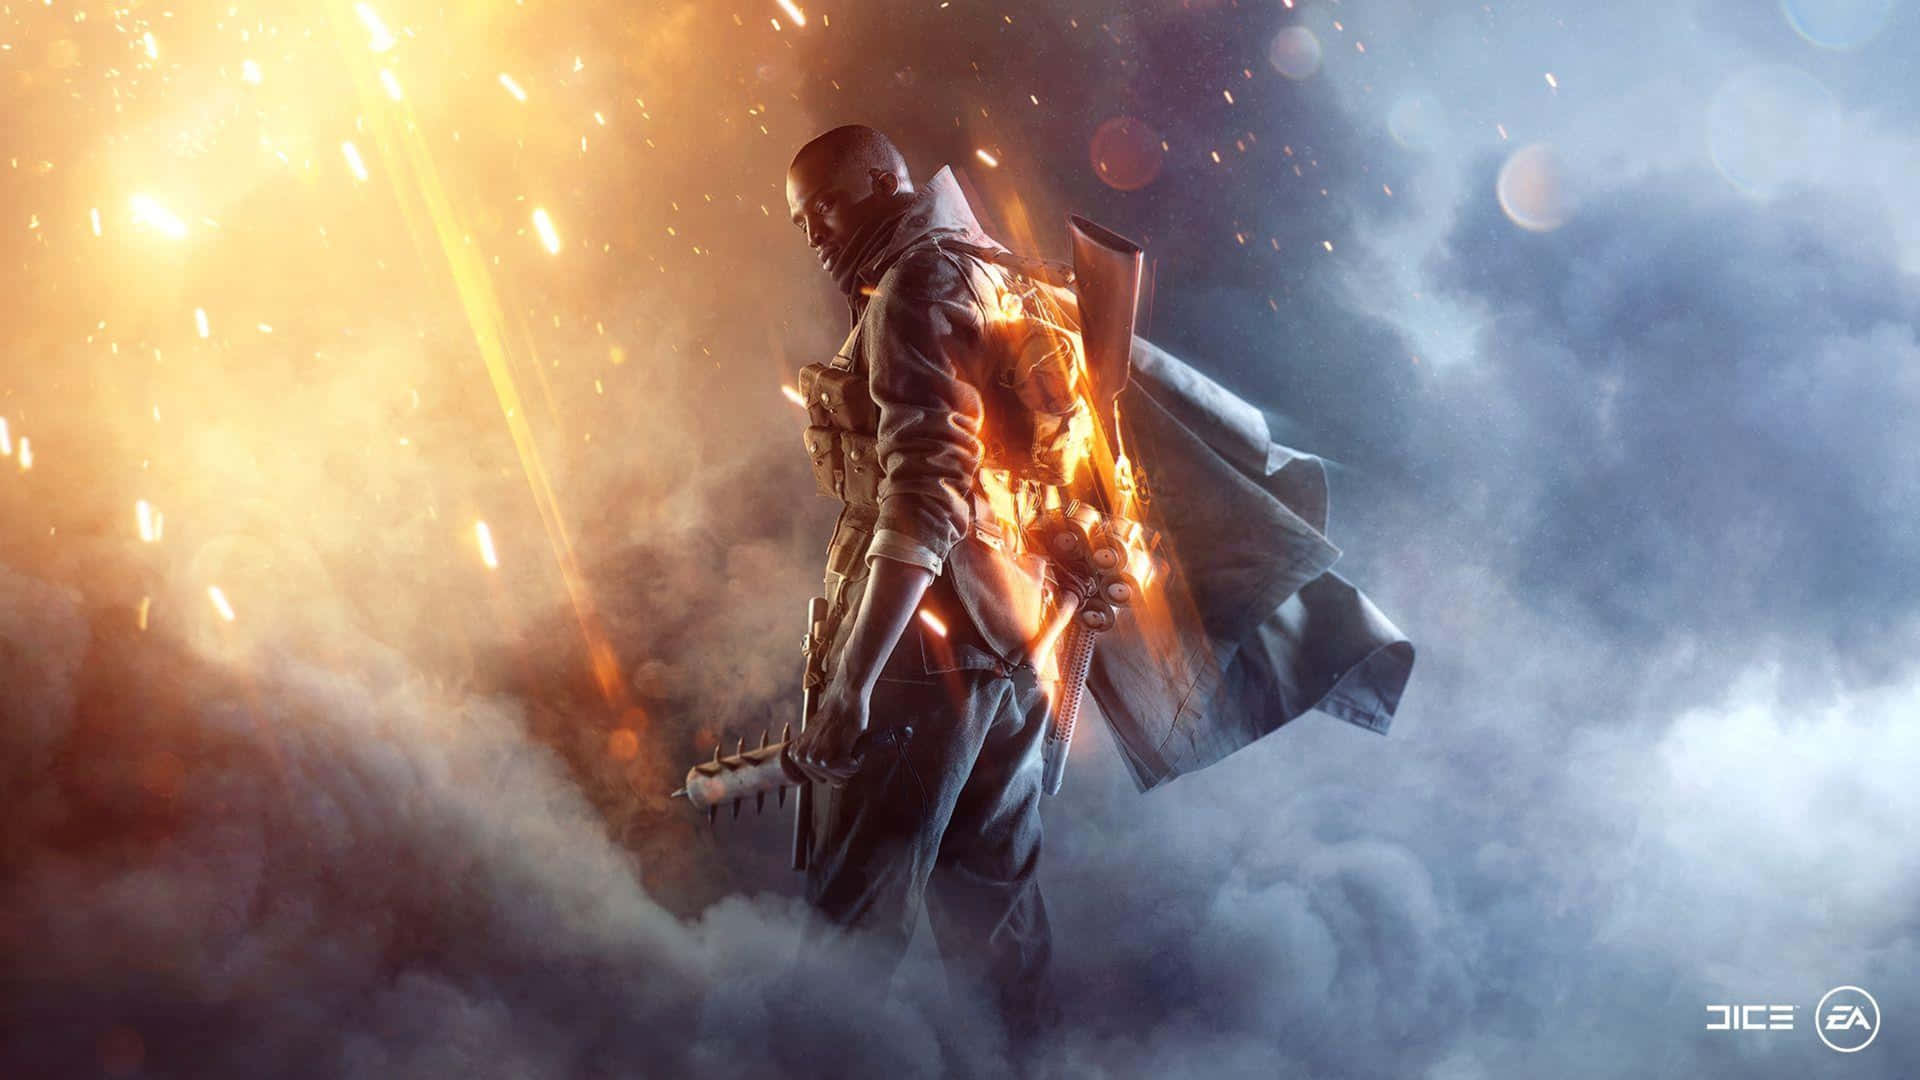 1440p Battlefield 1 Burning Rifle Background